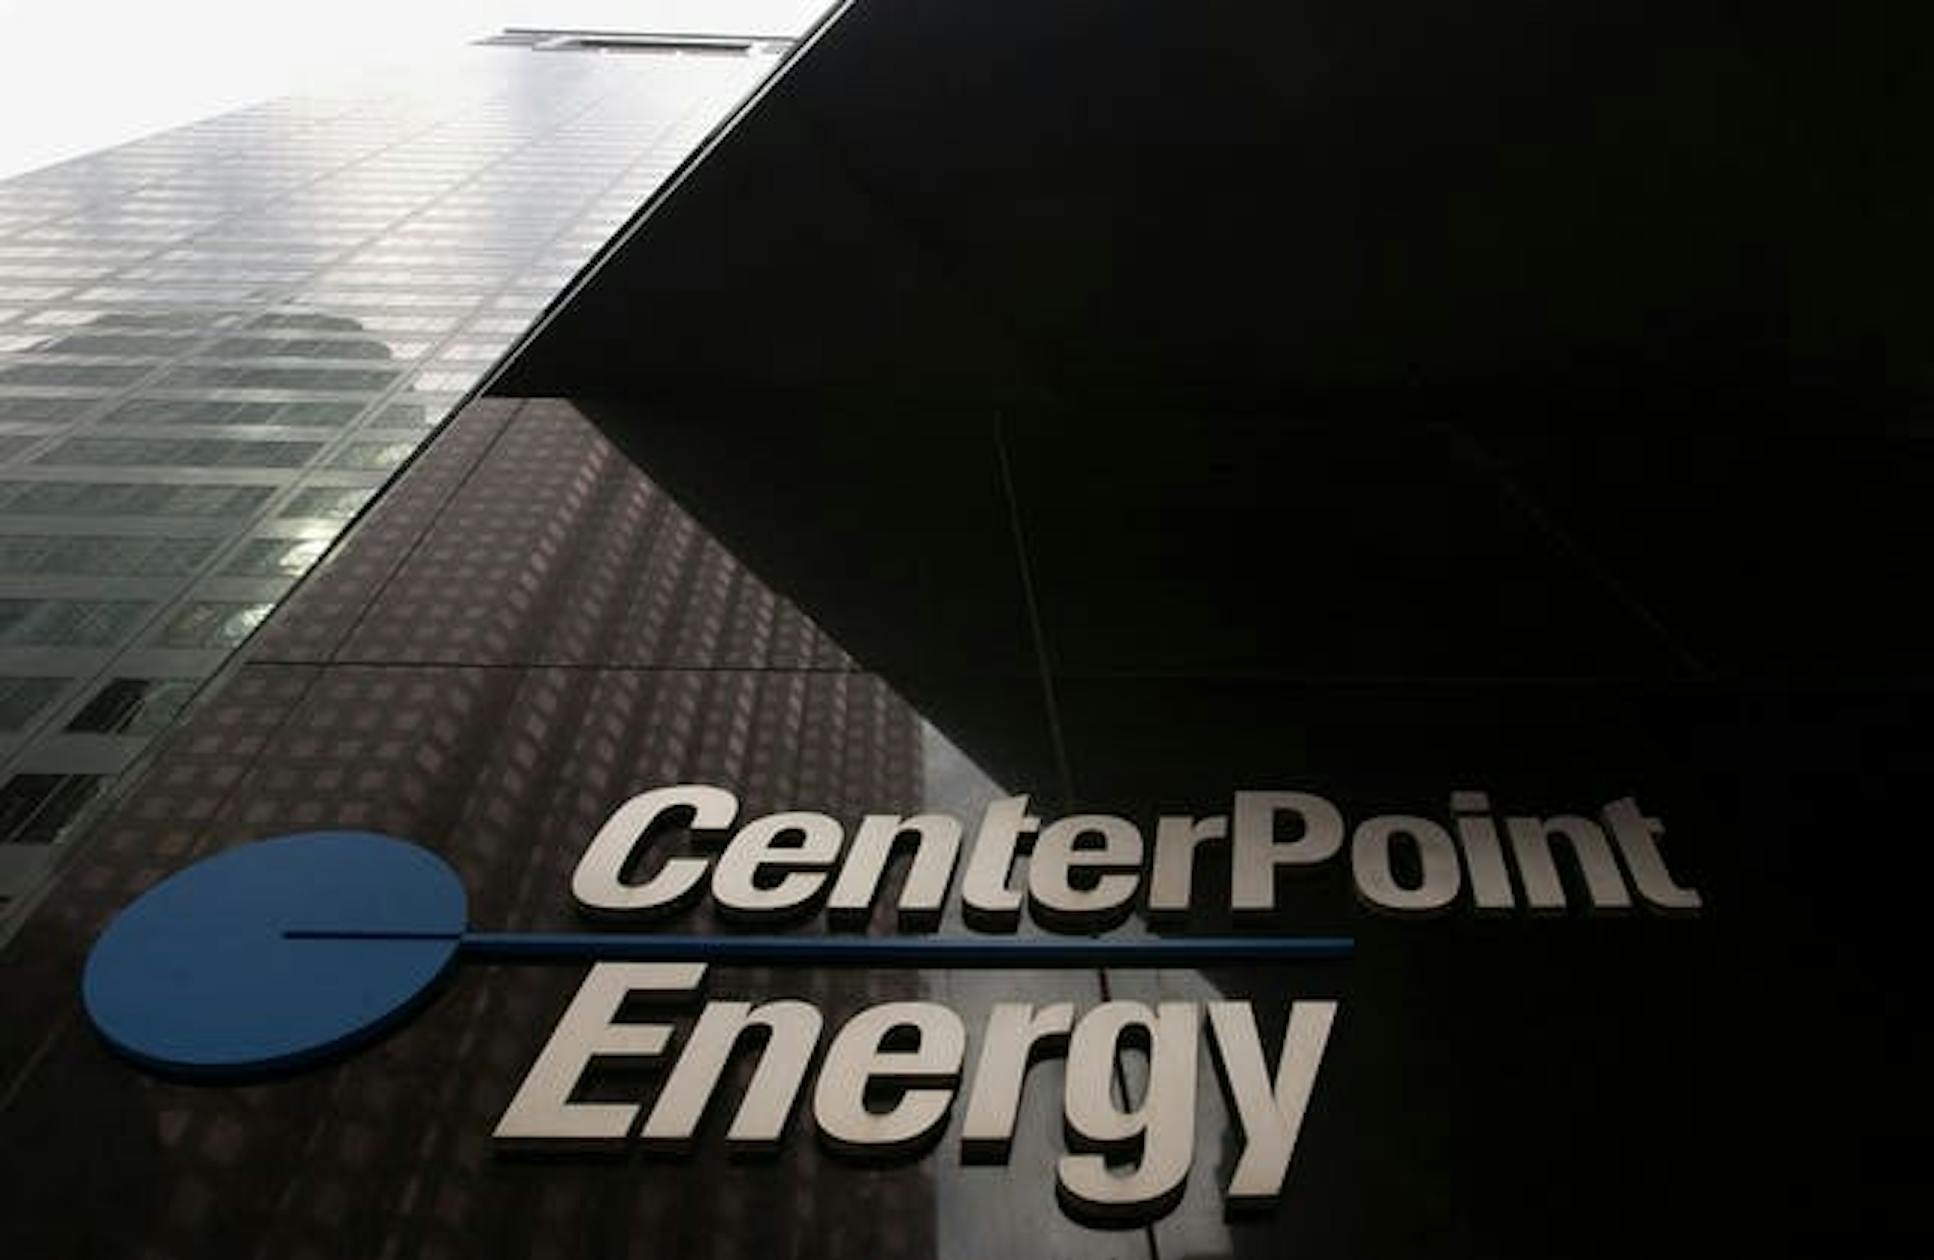 startribune.com - Mike Hughlett - Minnesota utility regulators approve CenterPoint Energy's $106M plan for clean energy projects